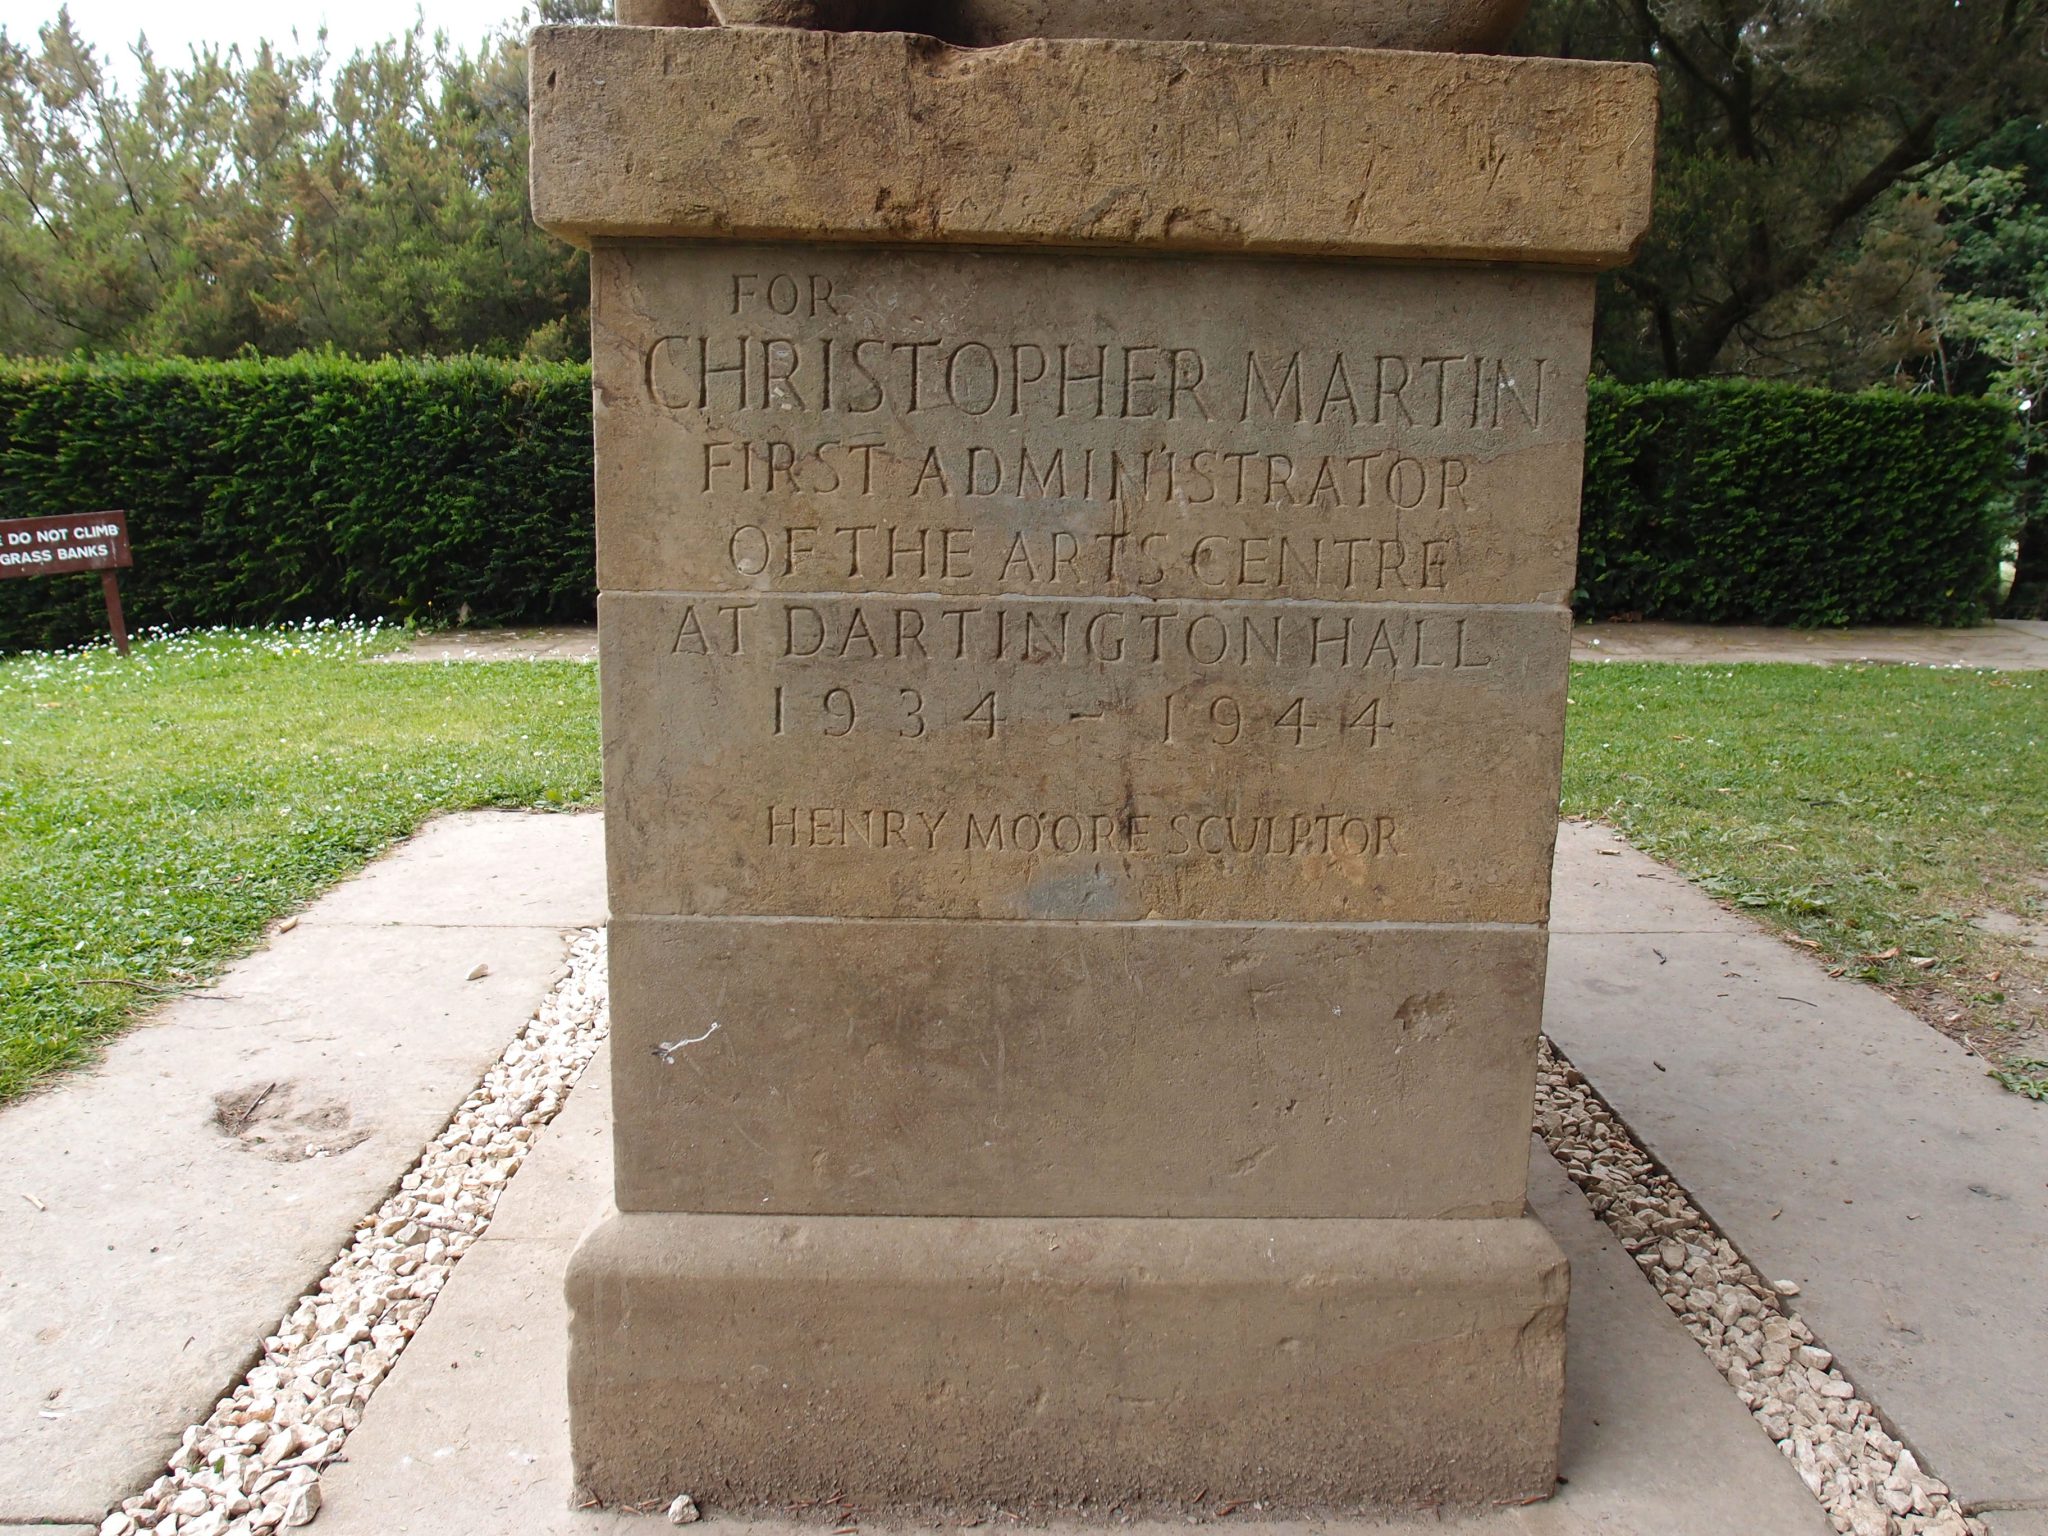 Inscription on pedestal of Moore sculpture.